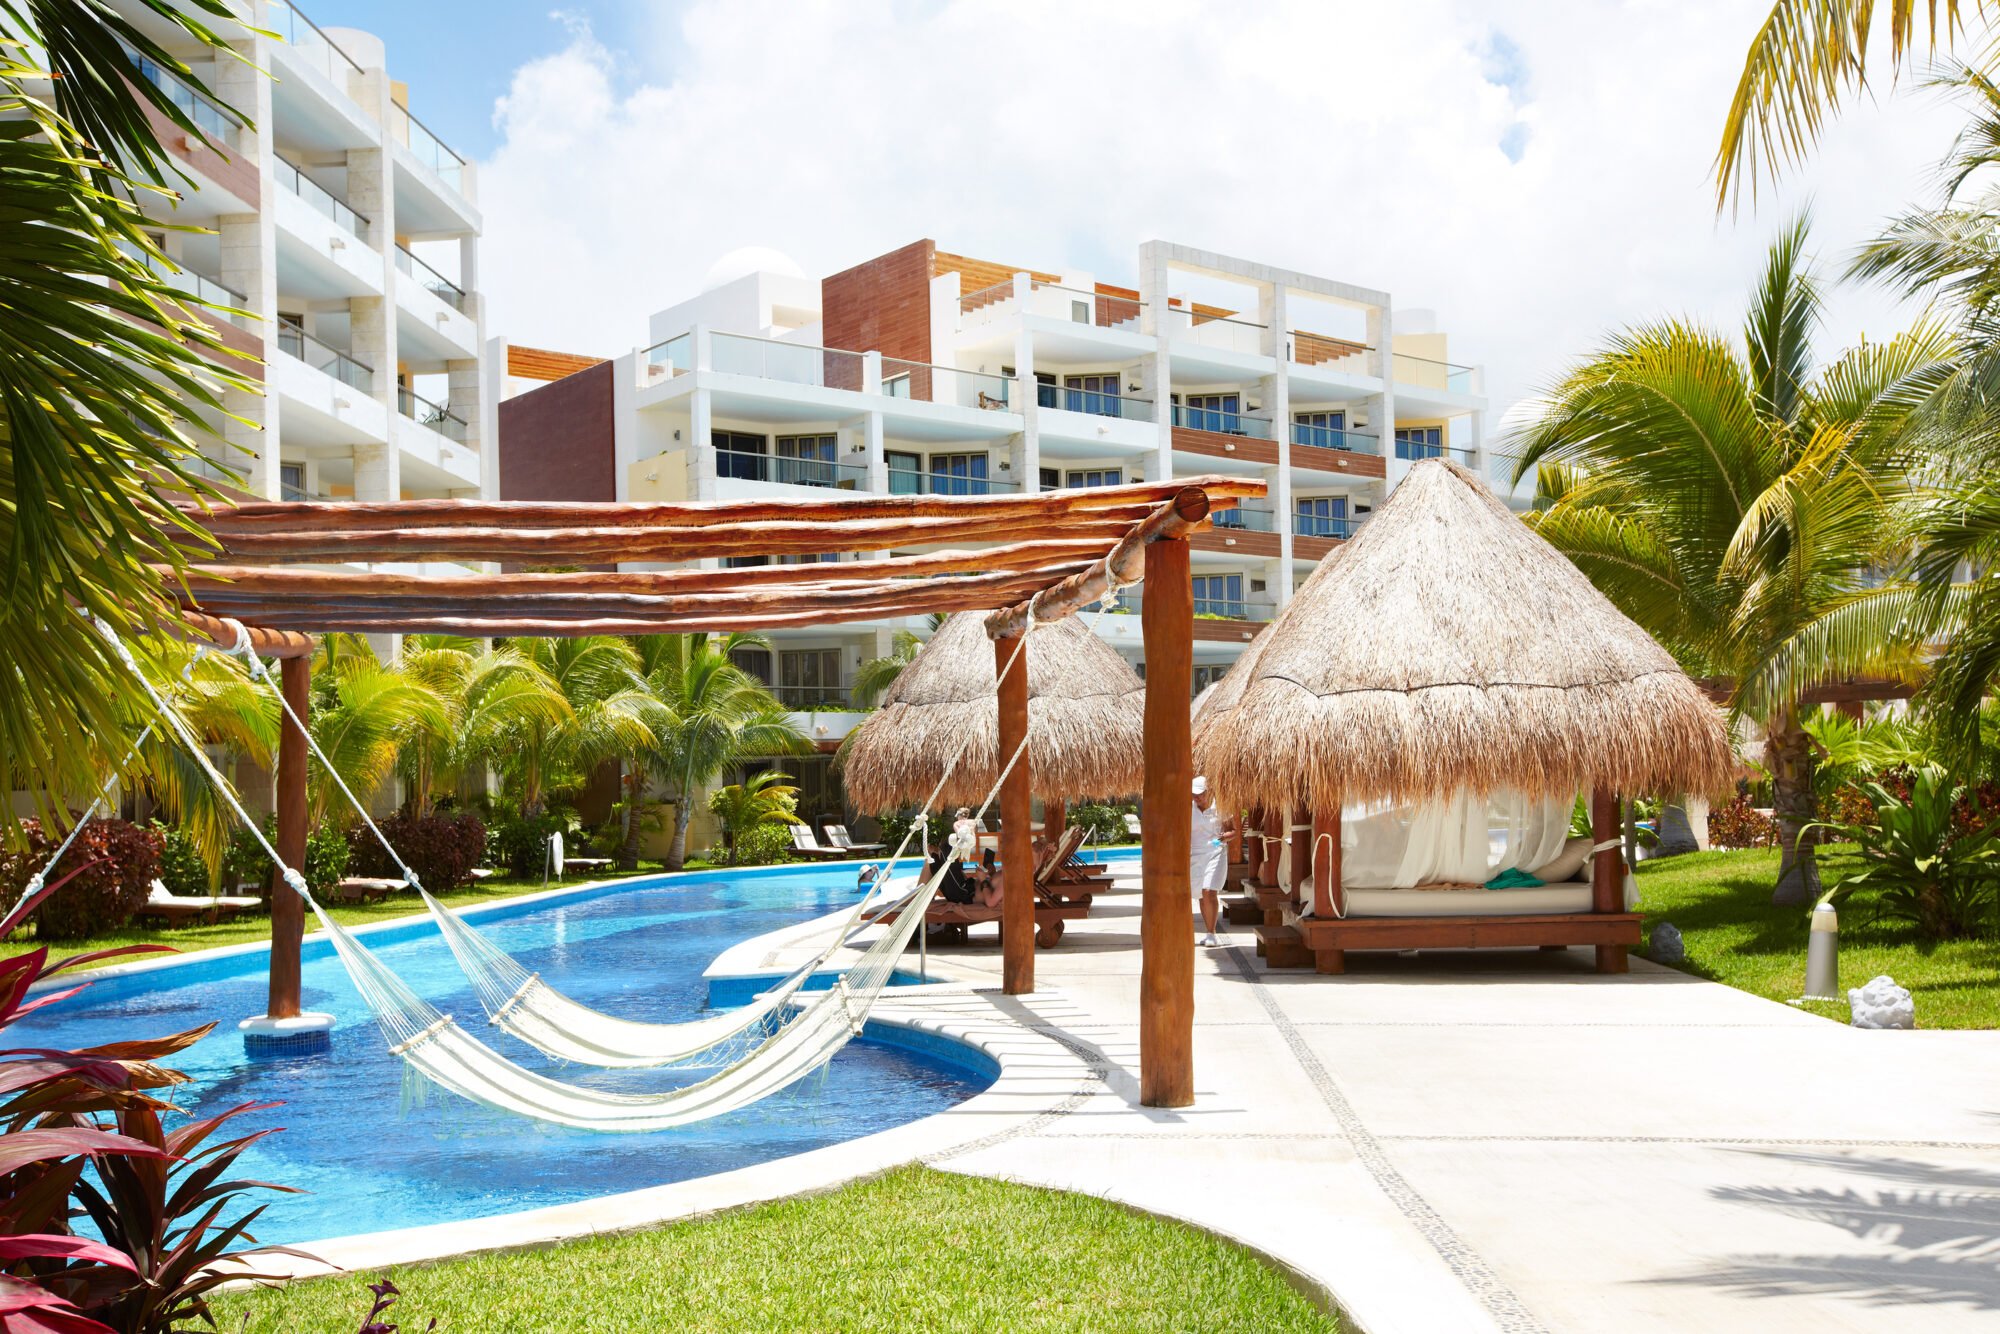 Swimming pool and hammock. Luxury exotic resort.